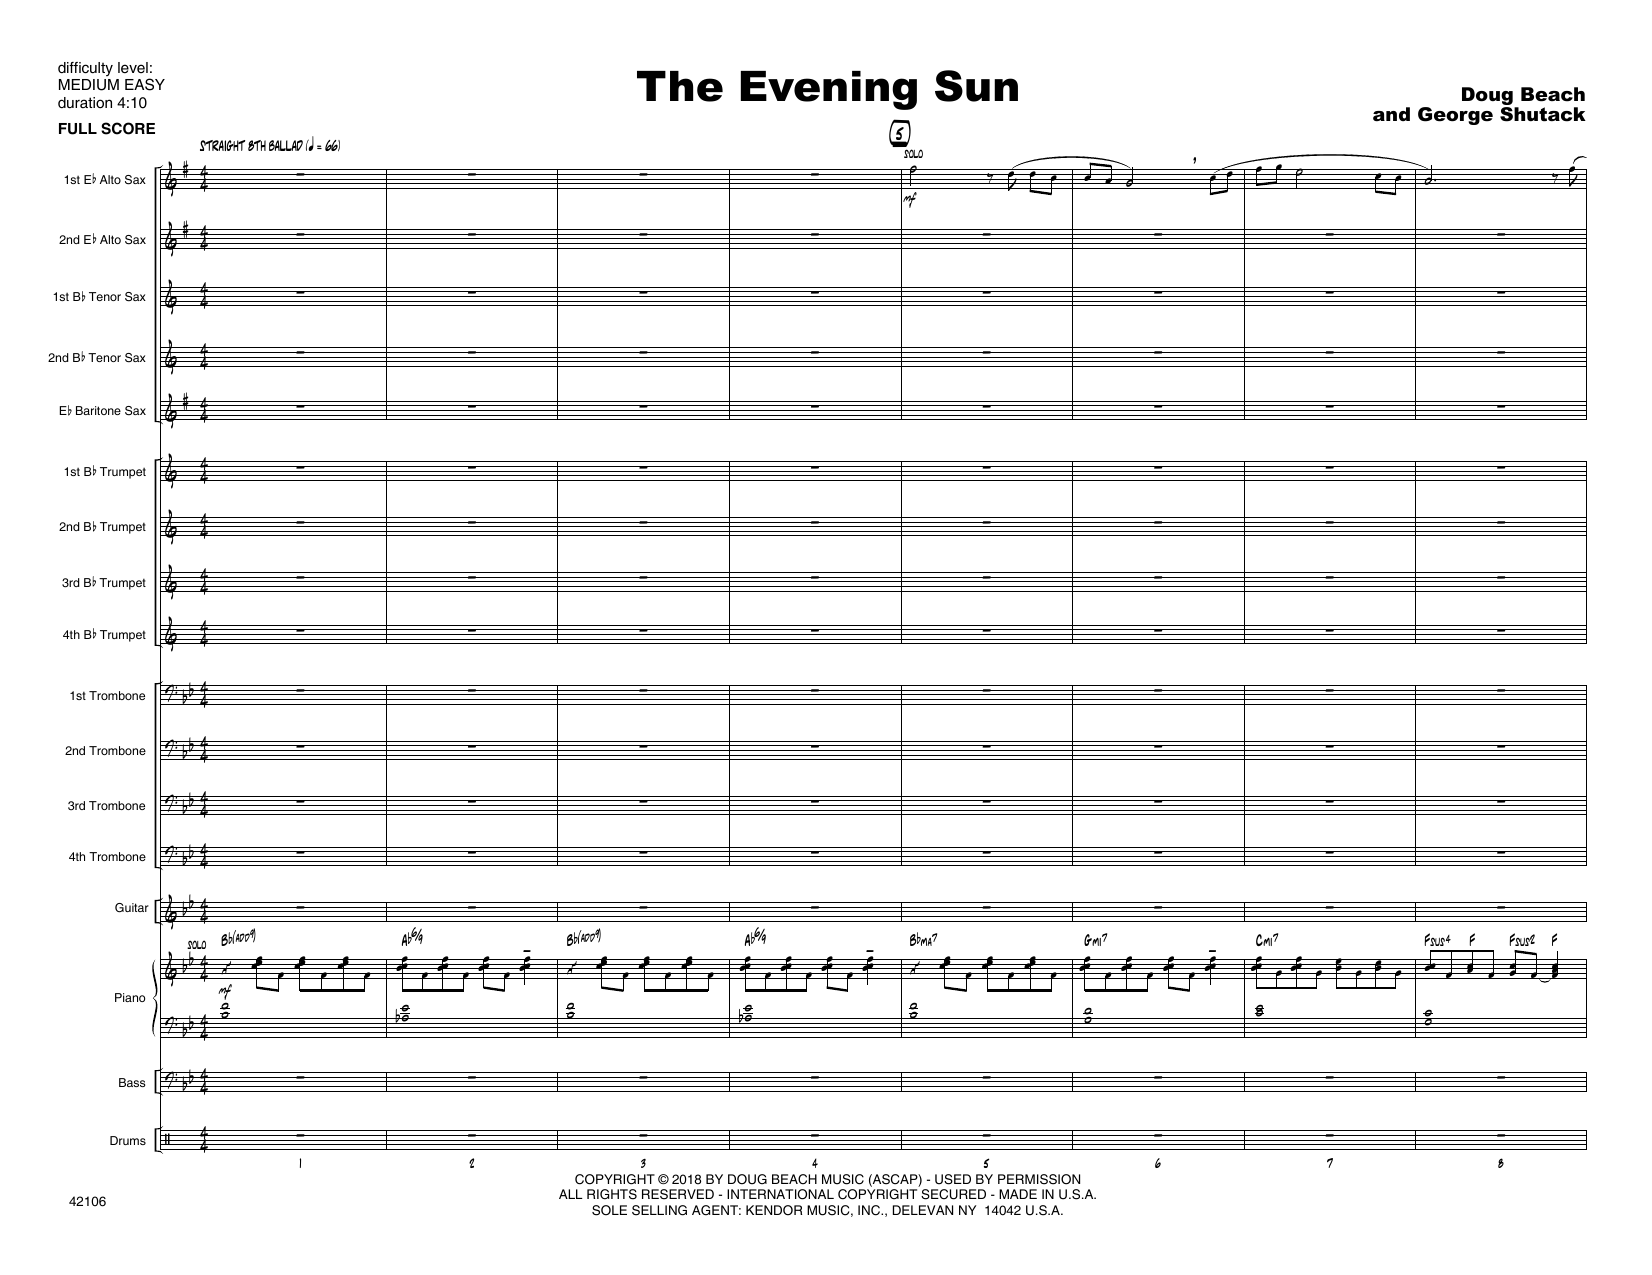 Download Doug Beach & George Shutack The Evening Sun - Full Score Sheet Music